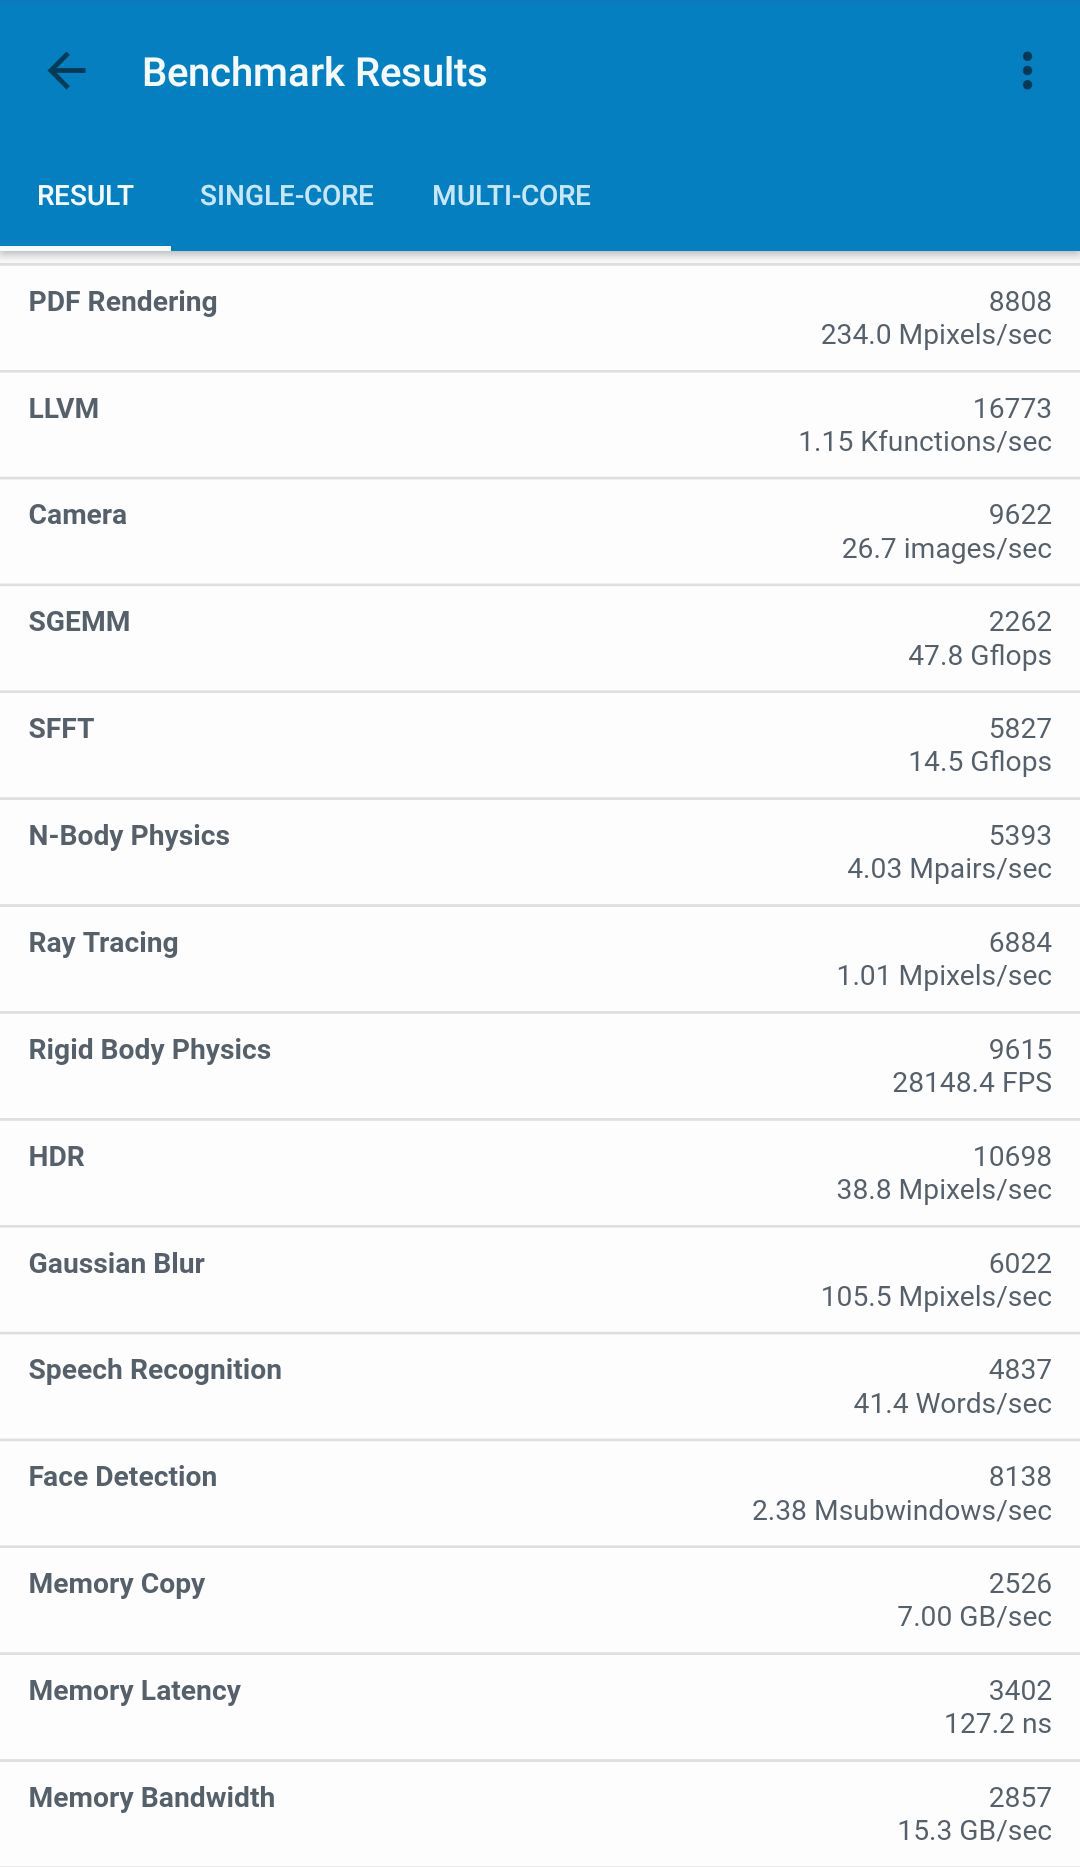 OnePlus 5 im Test   LTE, DualSim, 20 MP & AMOLED Display